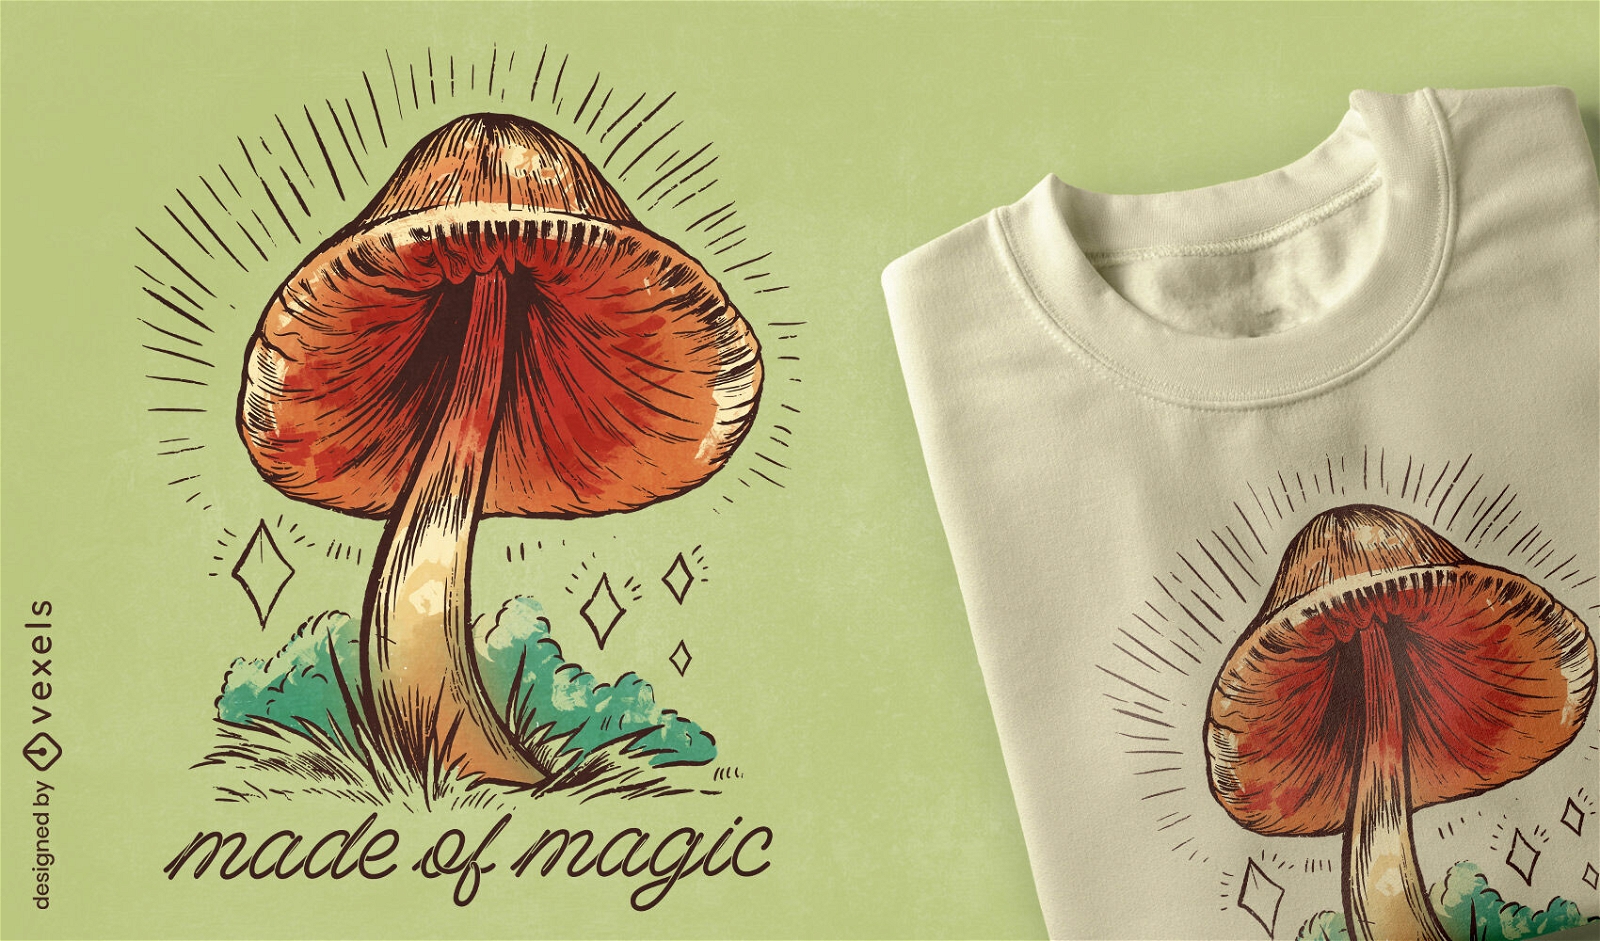 Magical mushroom nature t-shirt design